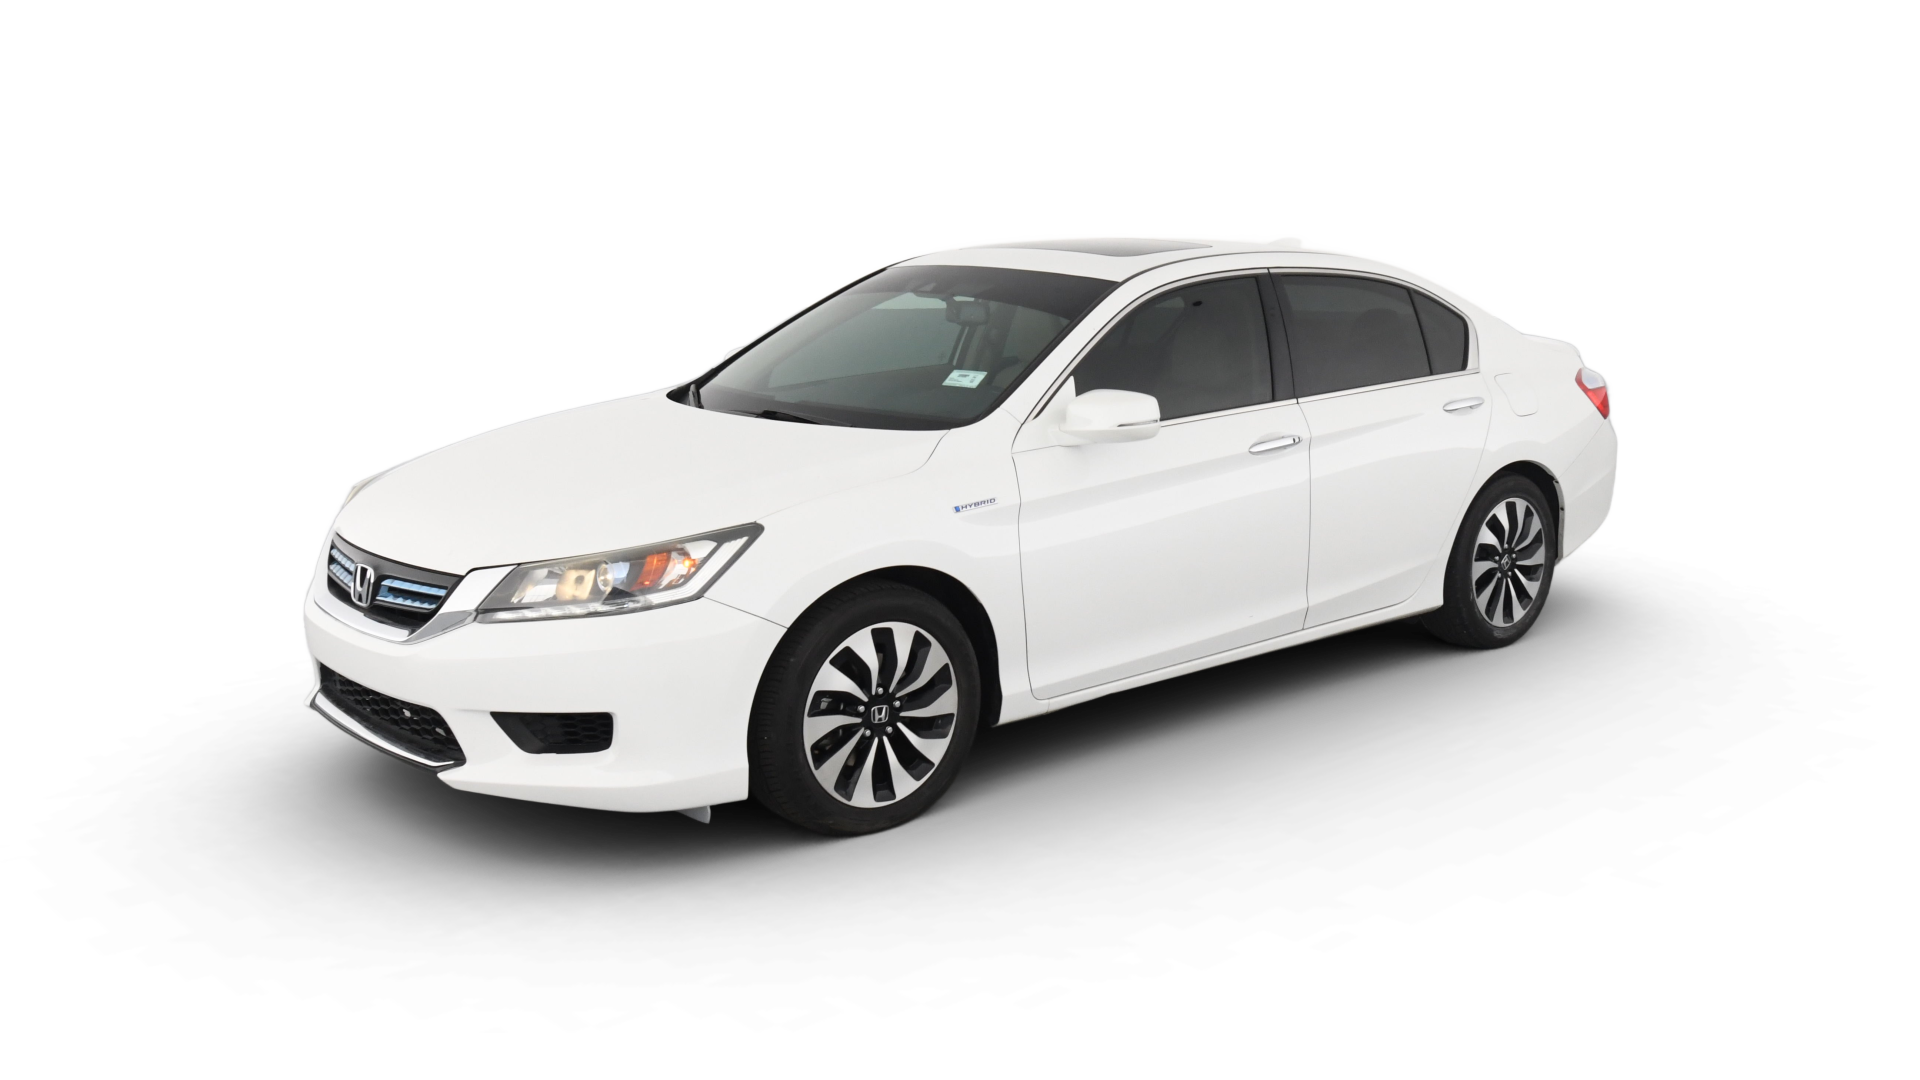 Honda Accord Hybrid model image.